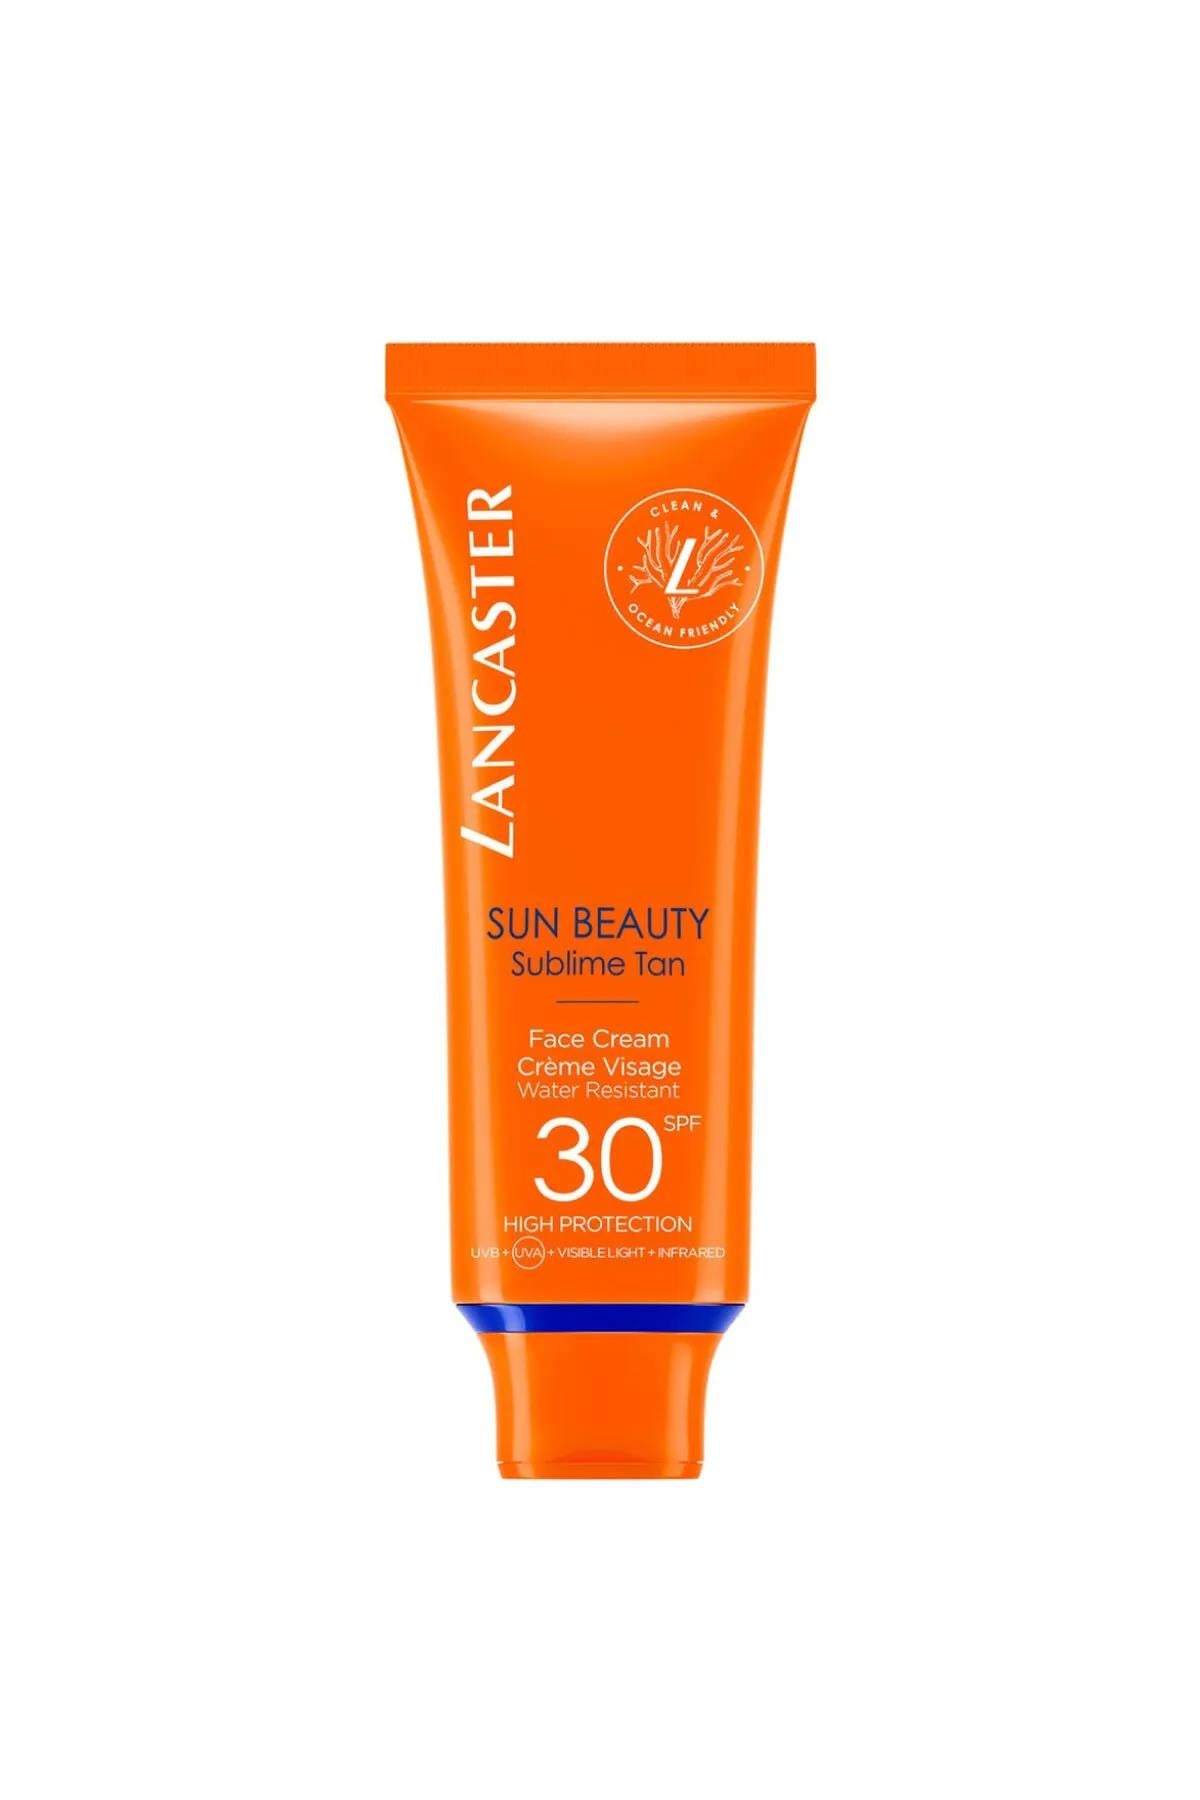 Lancaster Sun Beauty Face Cream SPF 30 50 ml